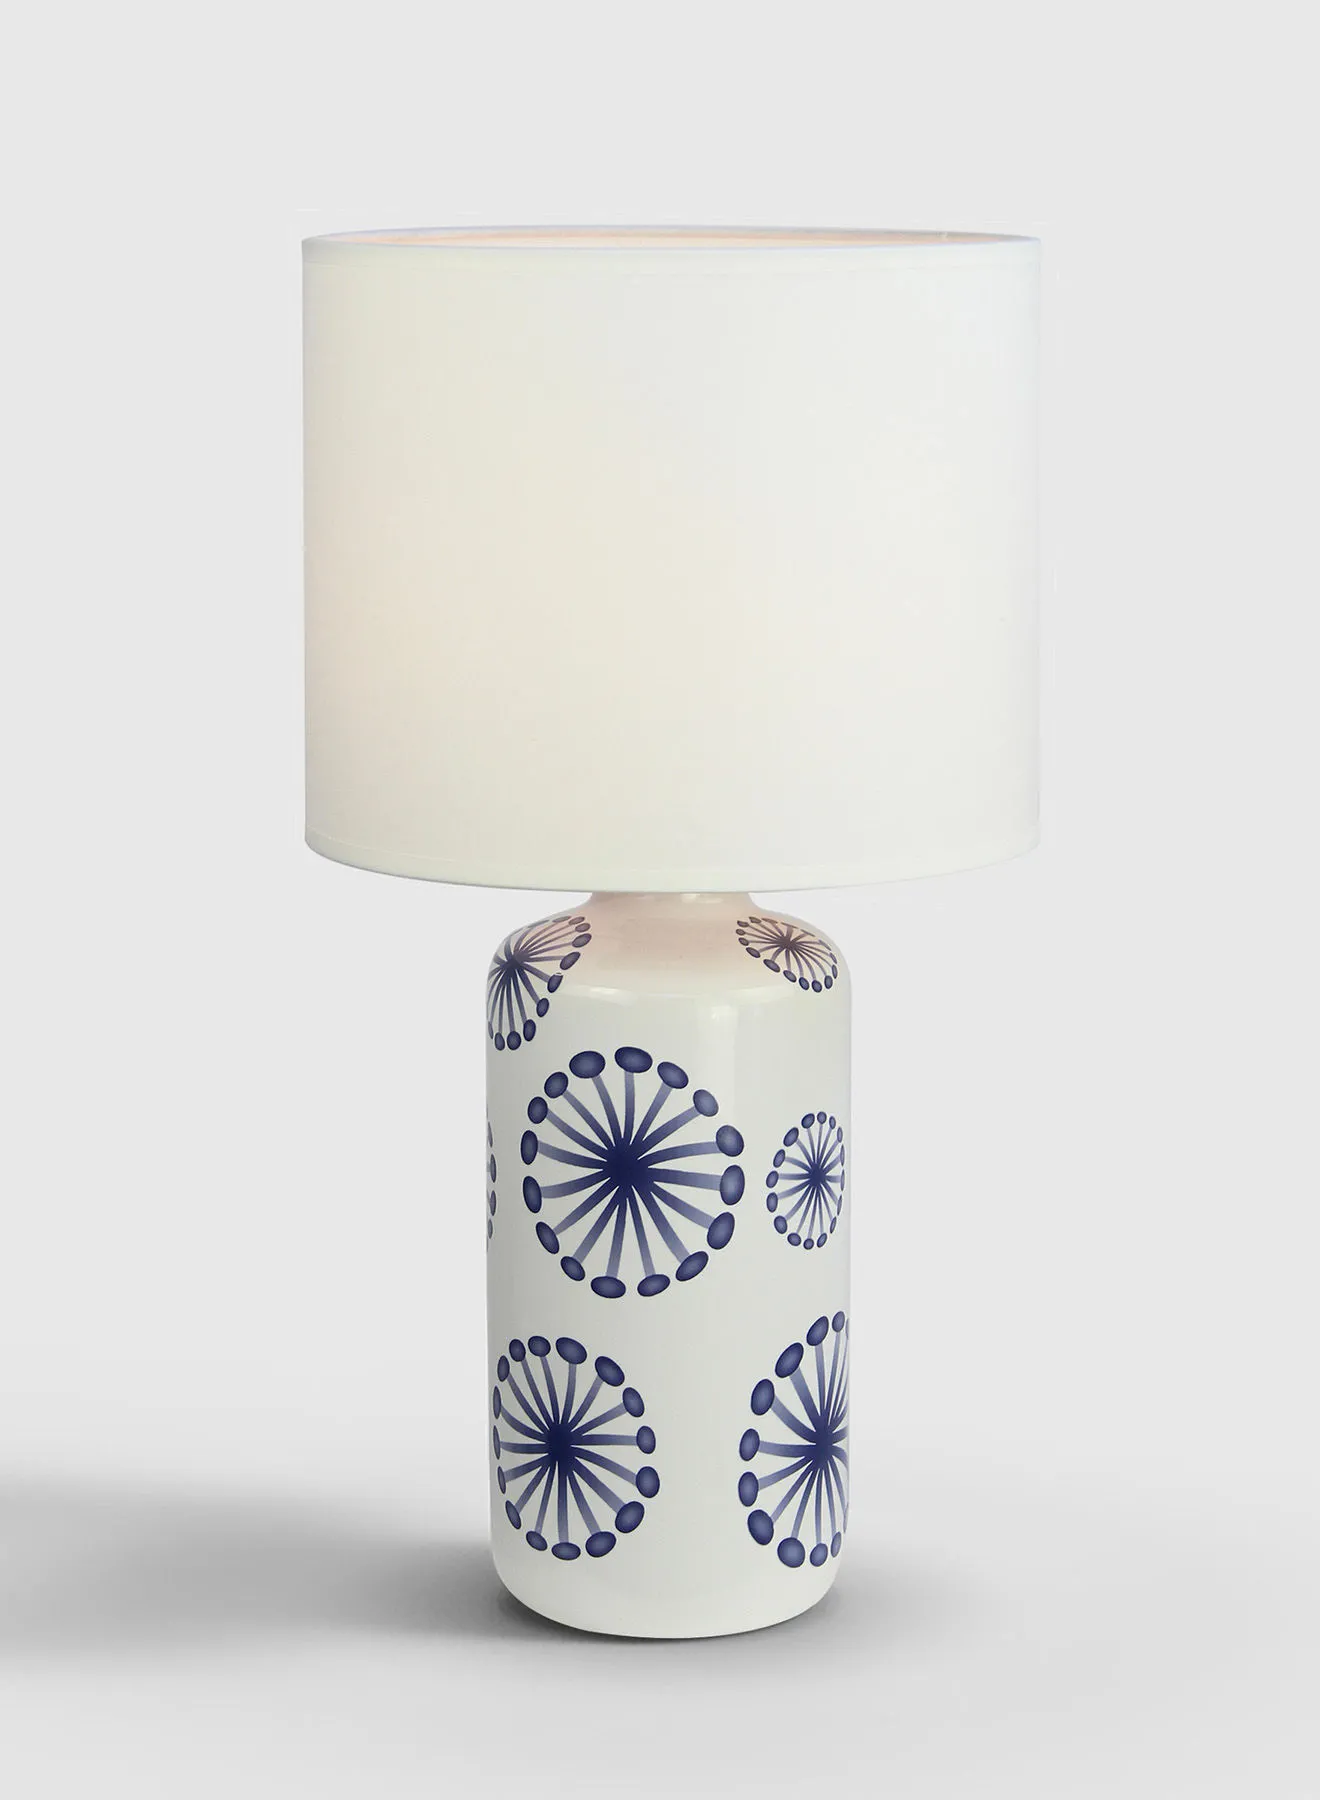 Switch Dandelion Ceramic Table Lamp مادة فاخرة فريدة من نوعها لمنزل أنيق ومثالي AT16102 أزرق / أوف وايت 25 × 49 أزرق / أوف وايت 25 × 49 سم